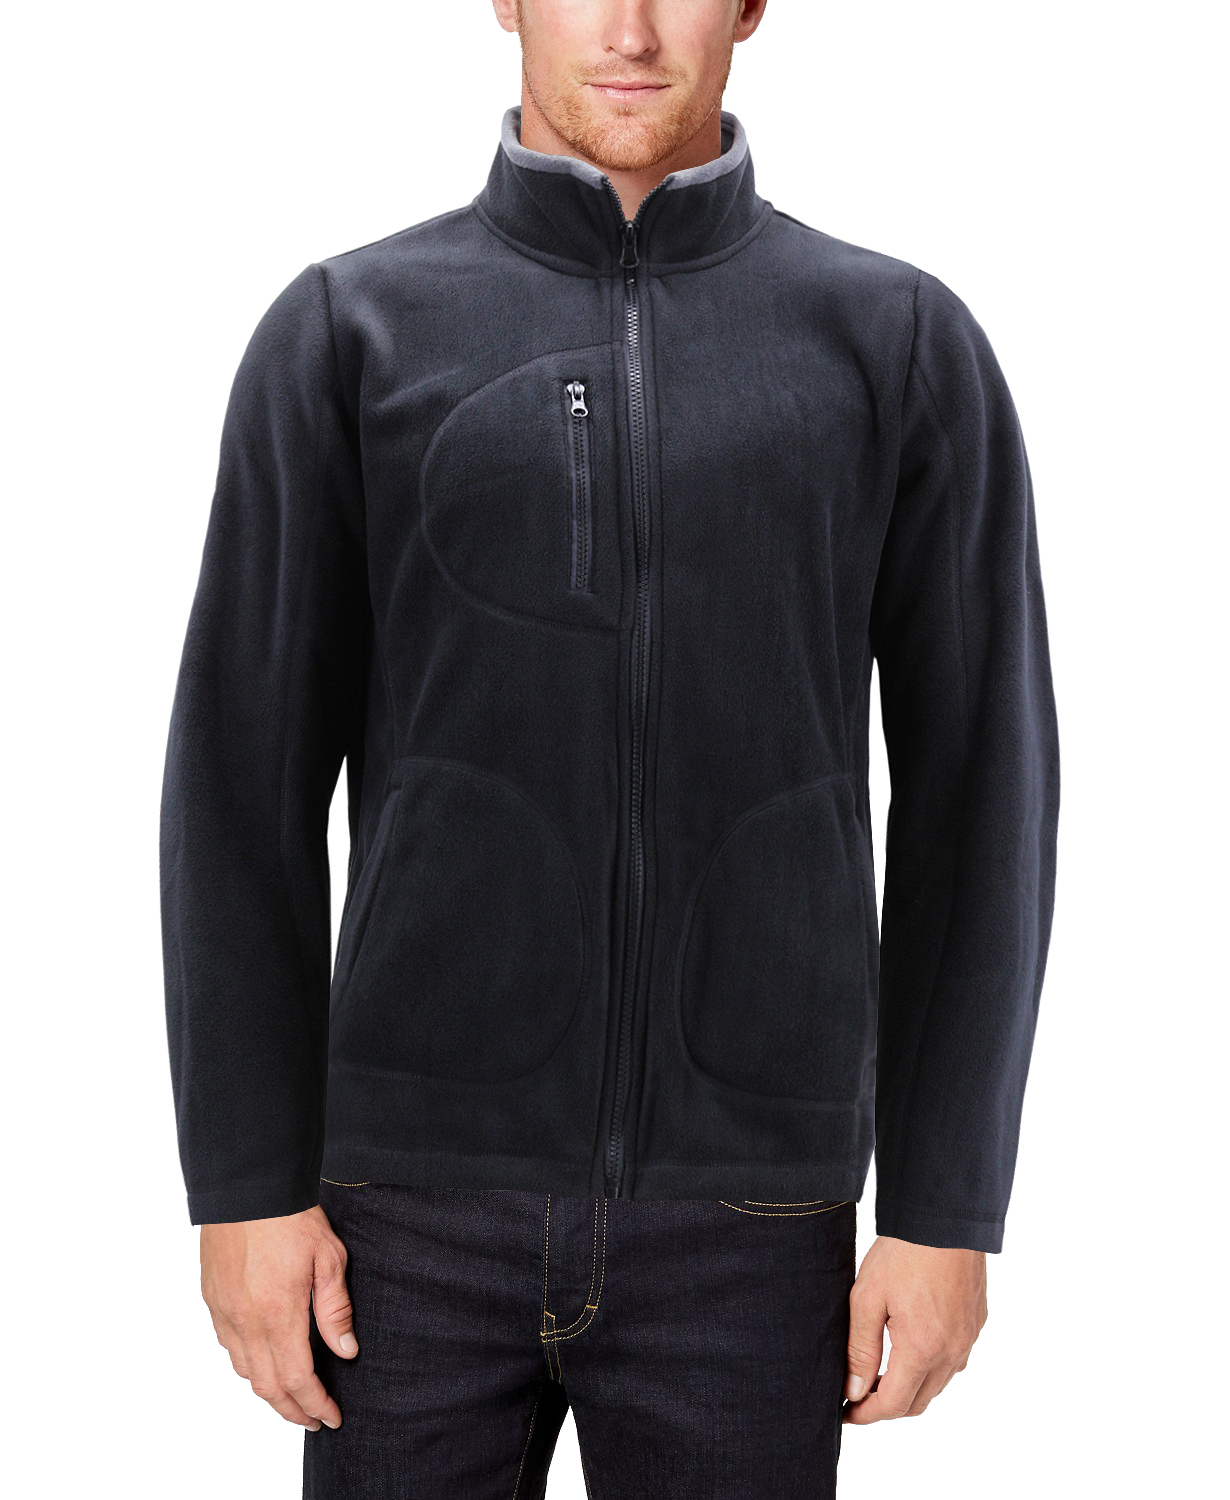 Men's Polar Fleece Full Zip-Up Collared Sweater Lightweight Warm Sweater Jacket (XL, Black) - image 1 of 3